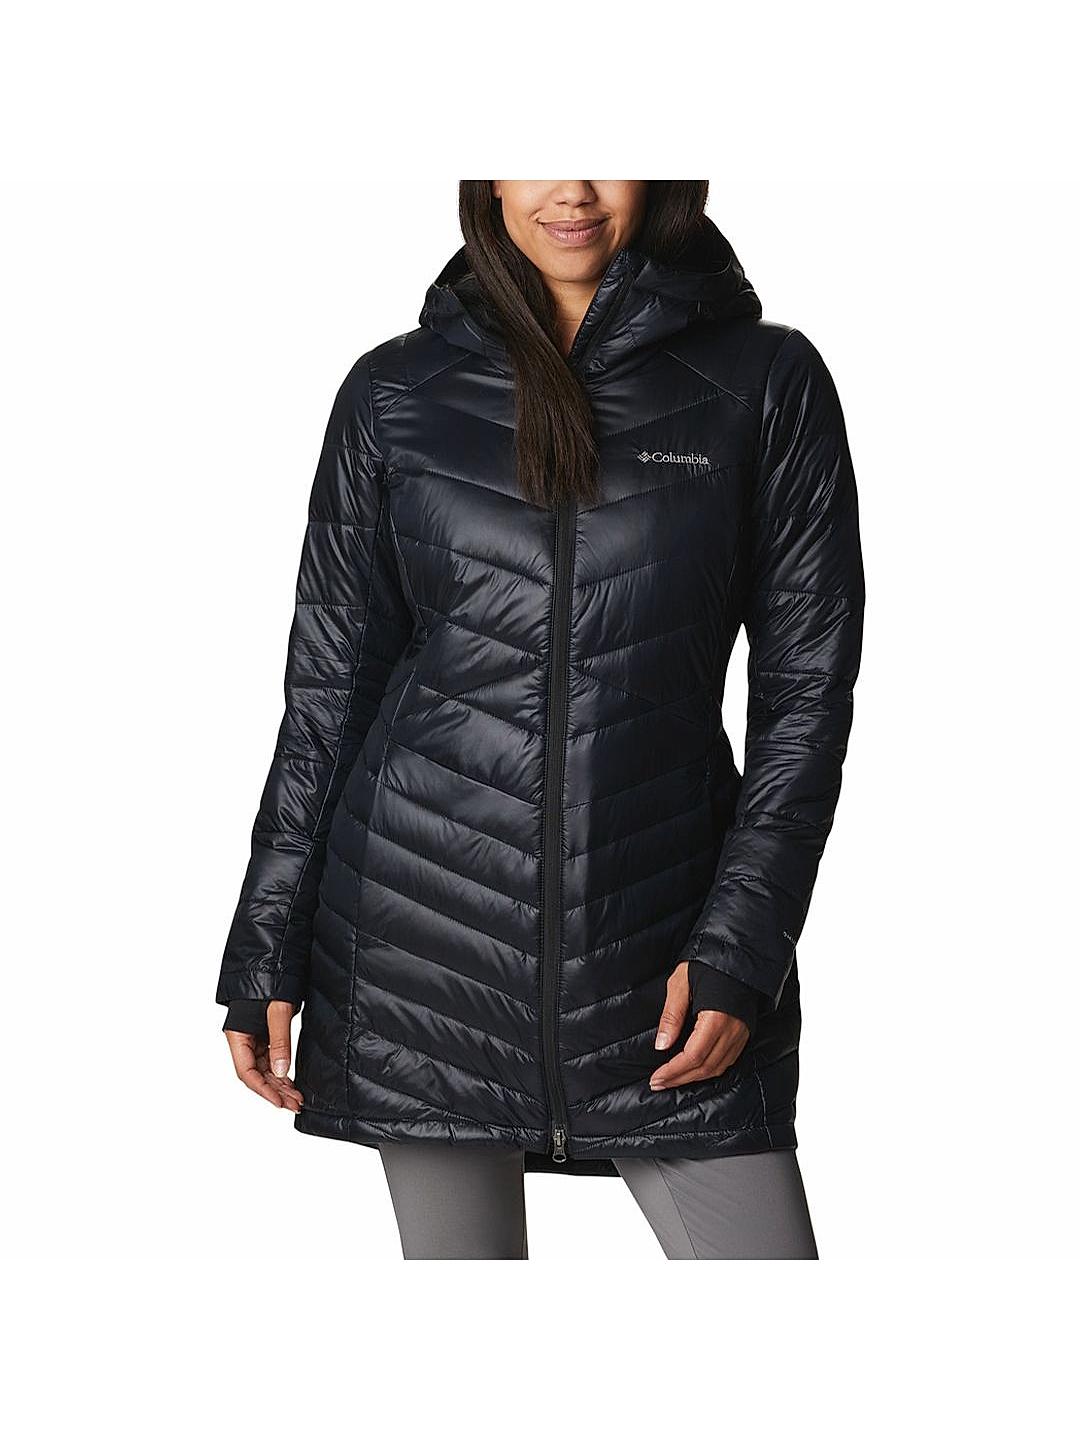 Buy Black Joy Peak Mid Jacket for Women Online at Columbia Sportswear ...